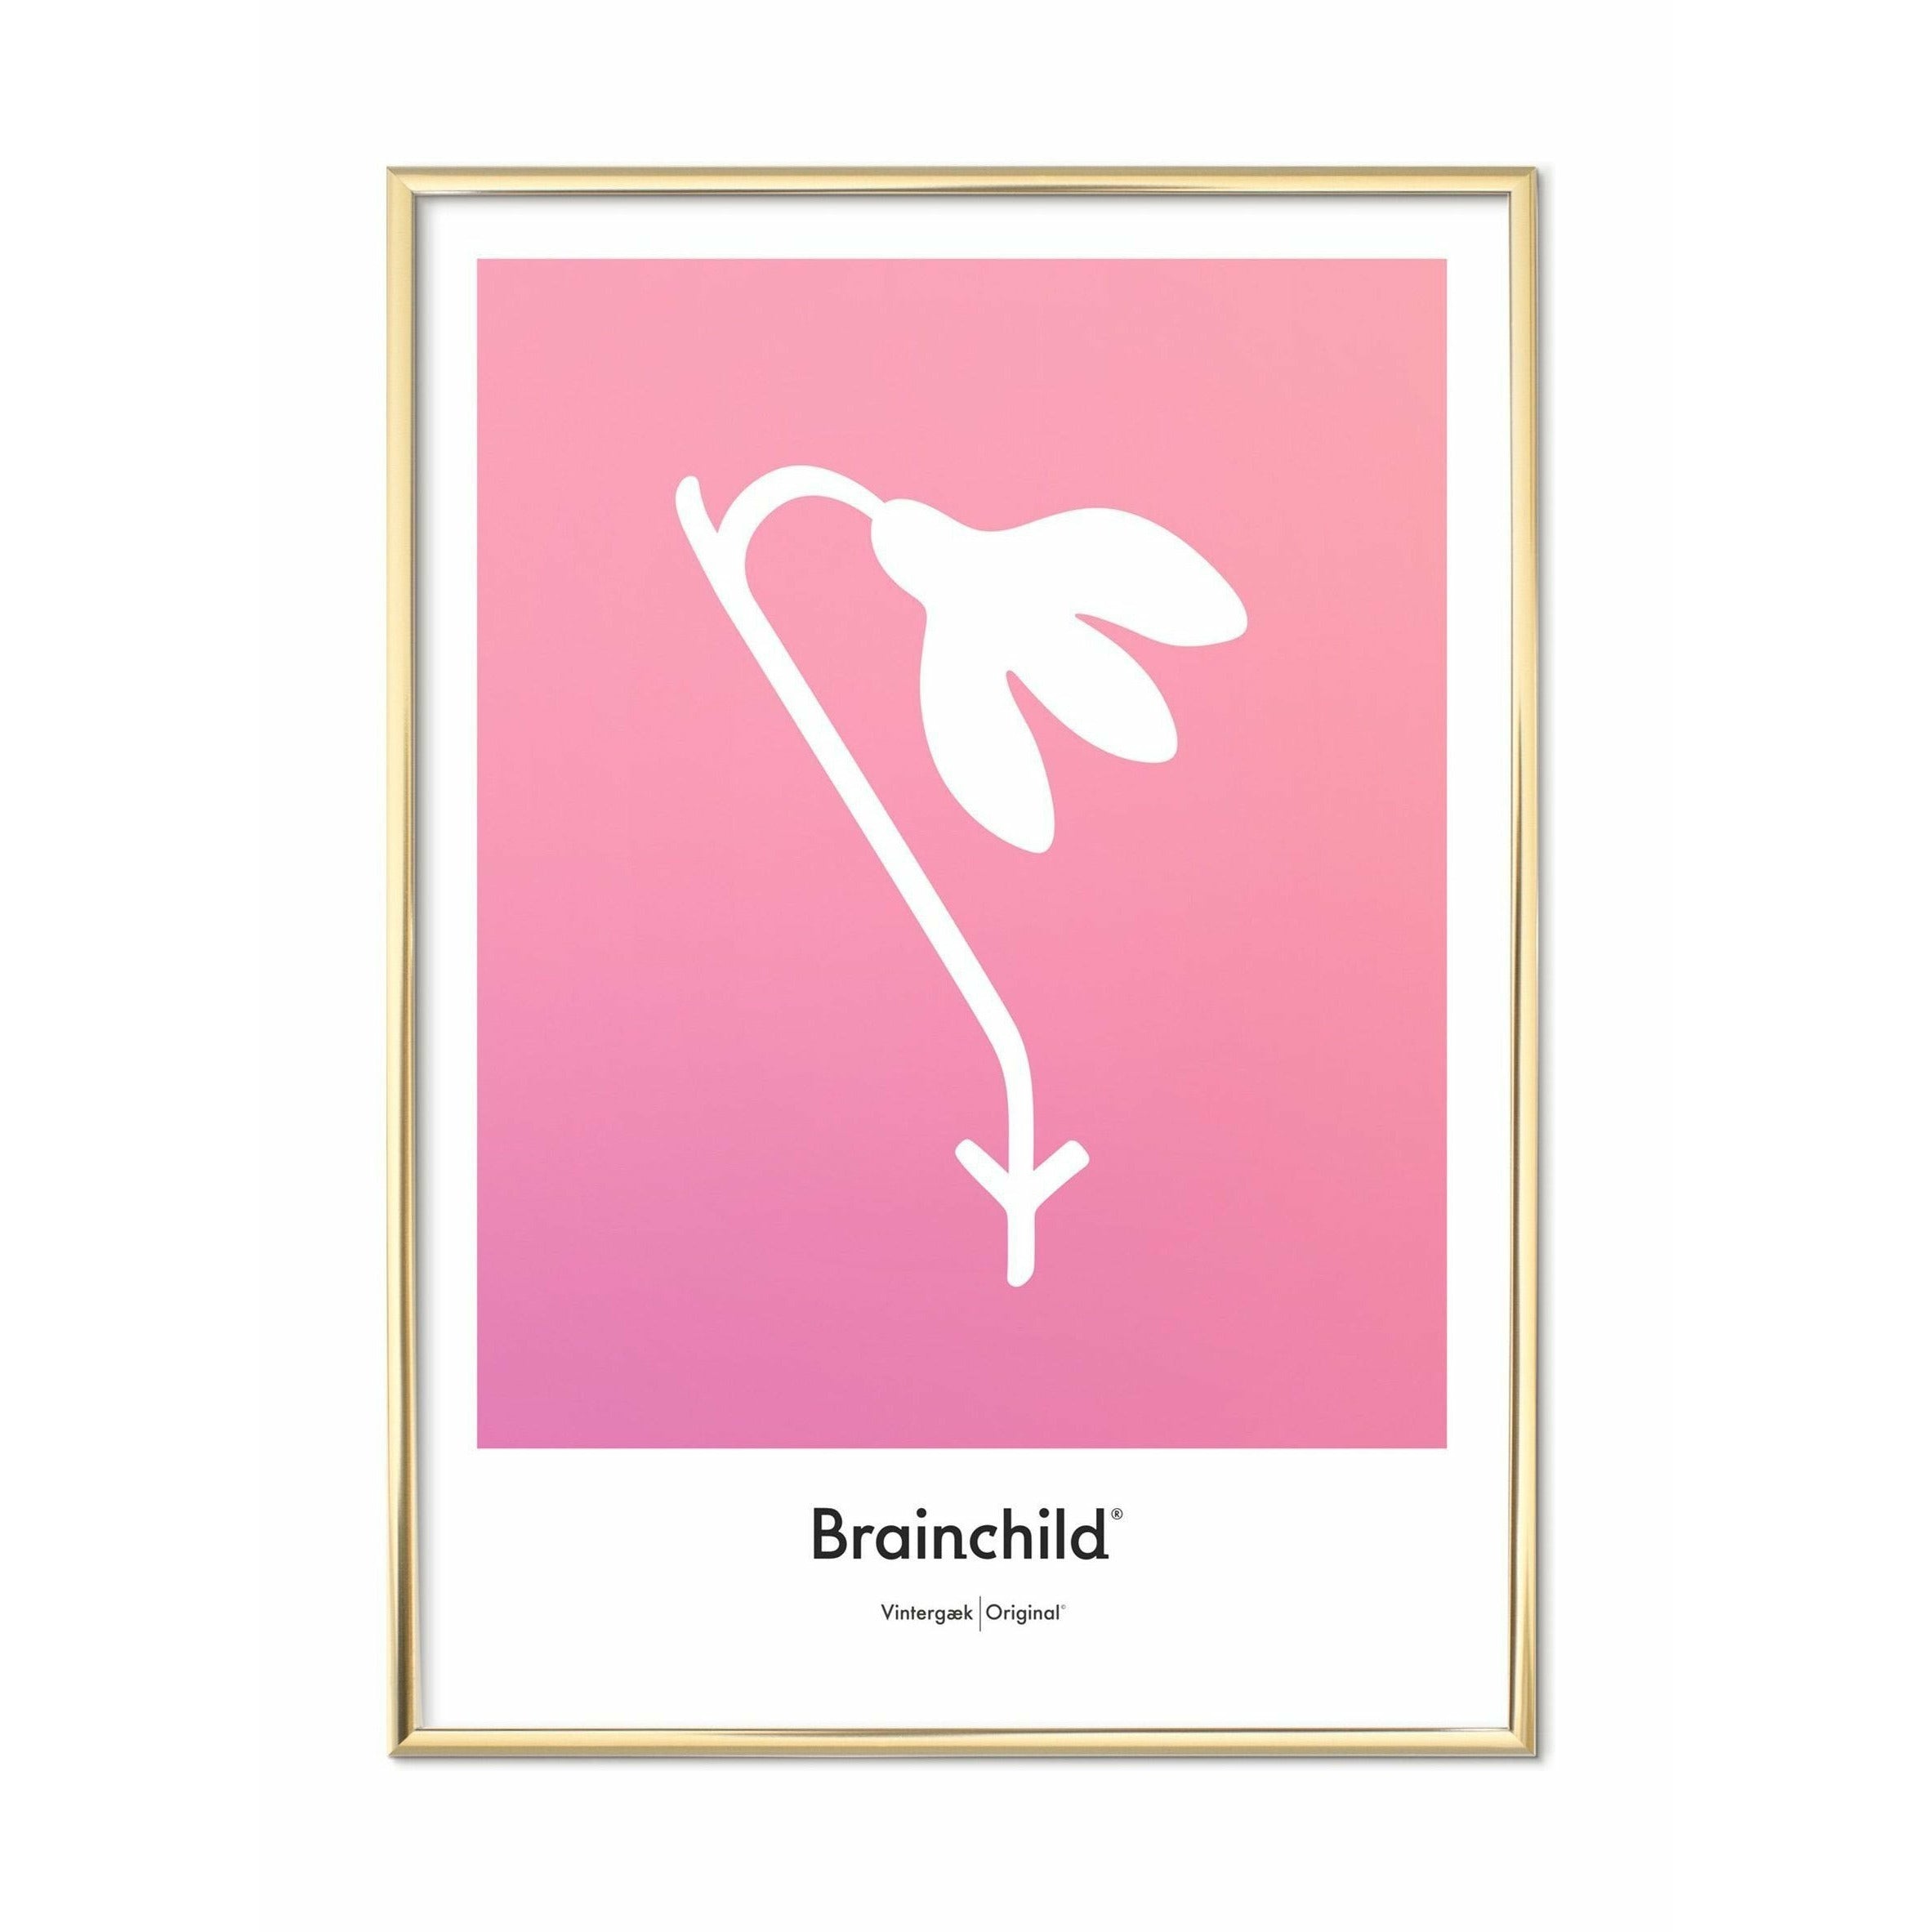 Brainchild Snowdrop Design Icon Poster, Brass Colored Frame A5, Pink